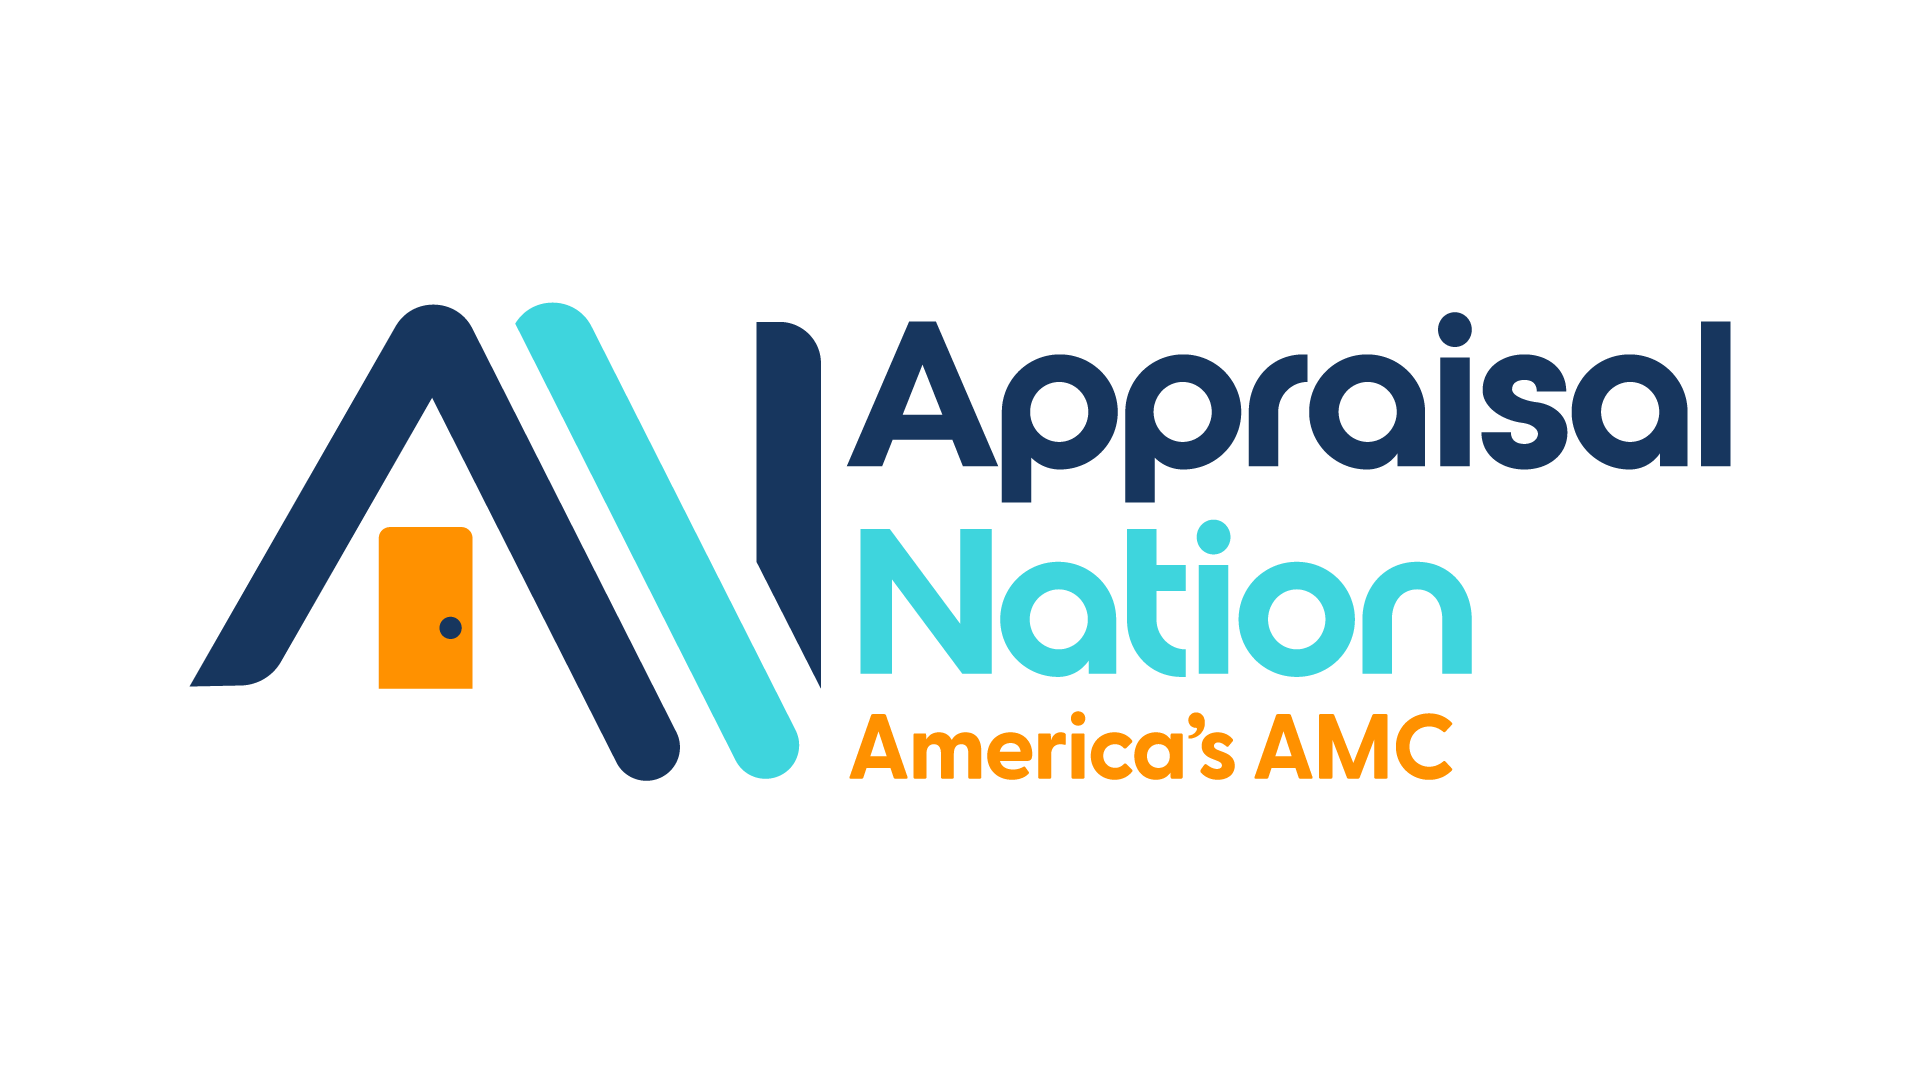 Appraisal Nation logo